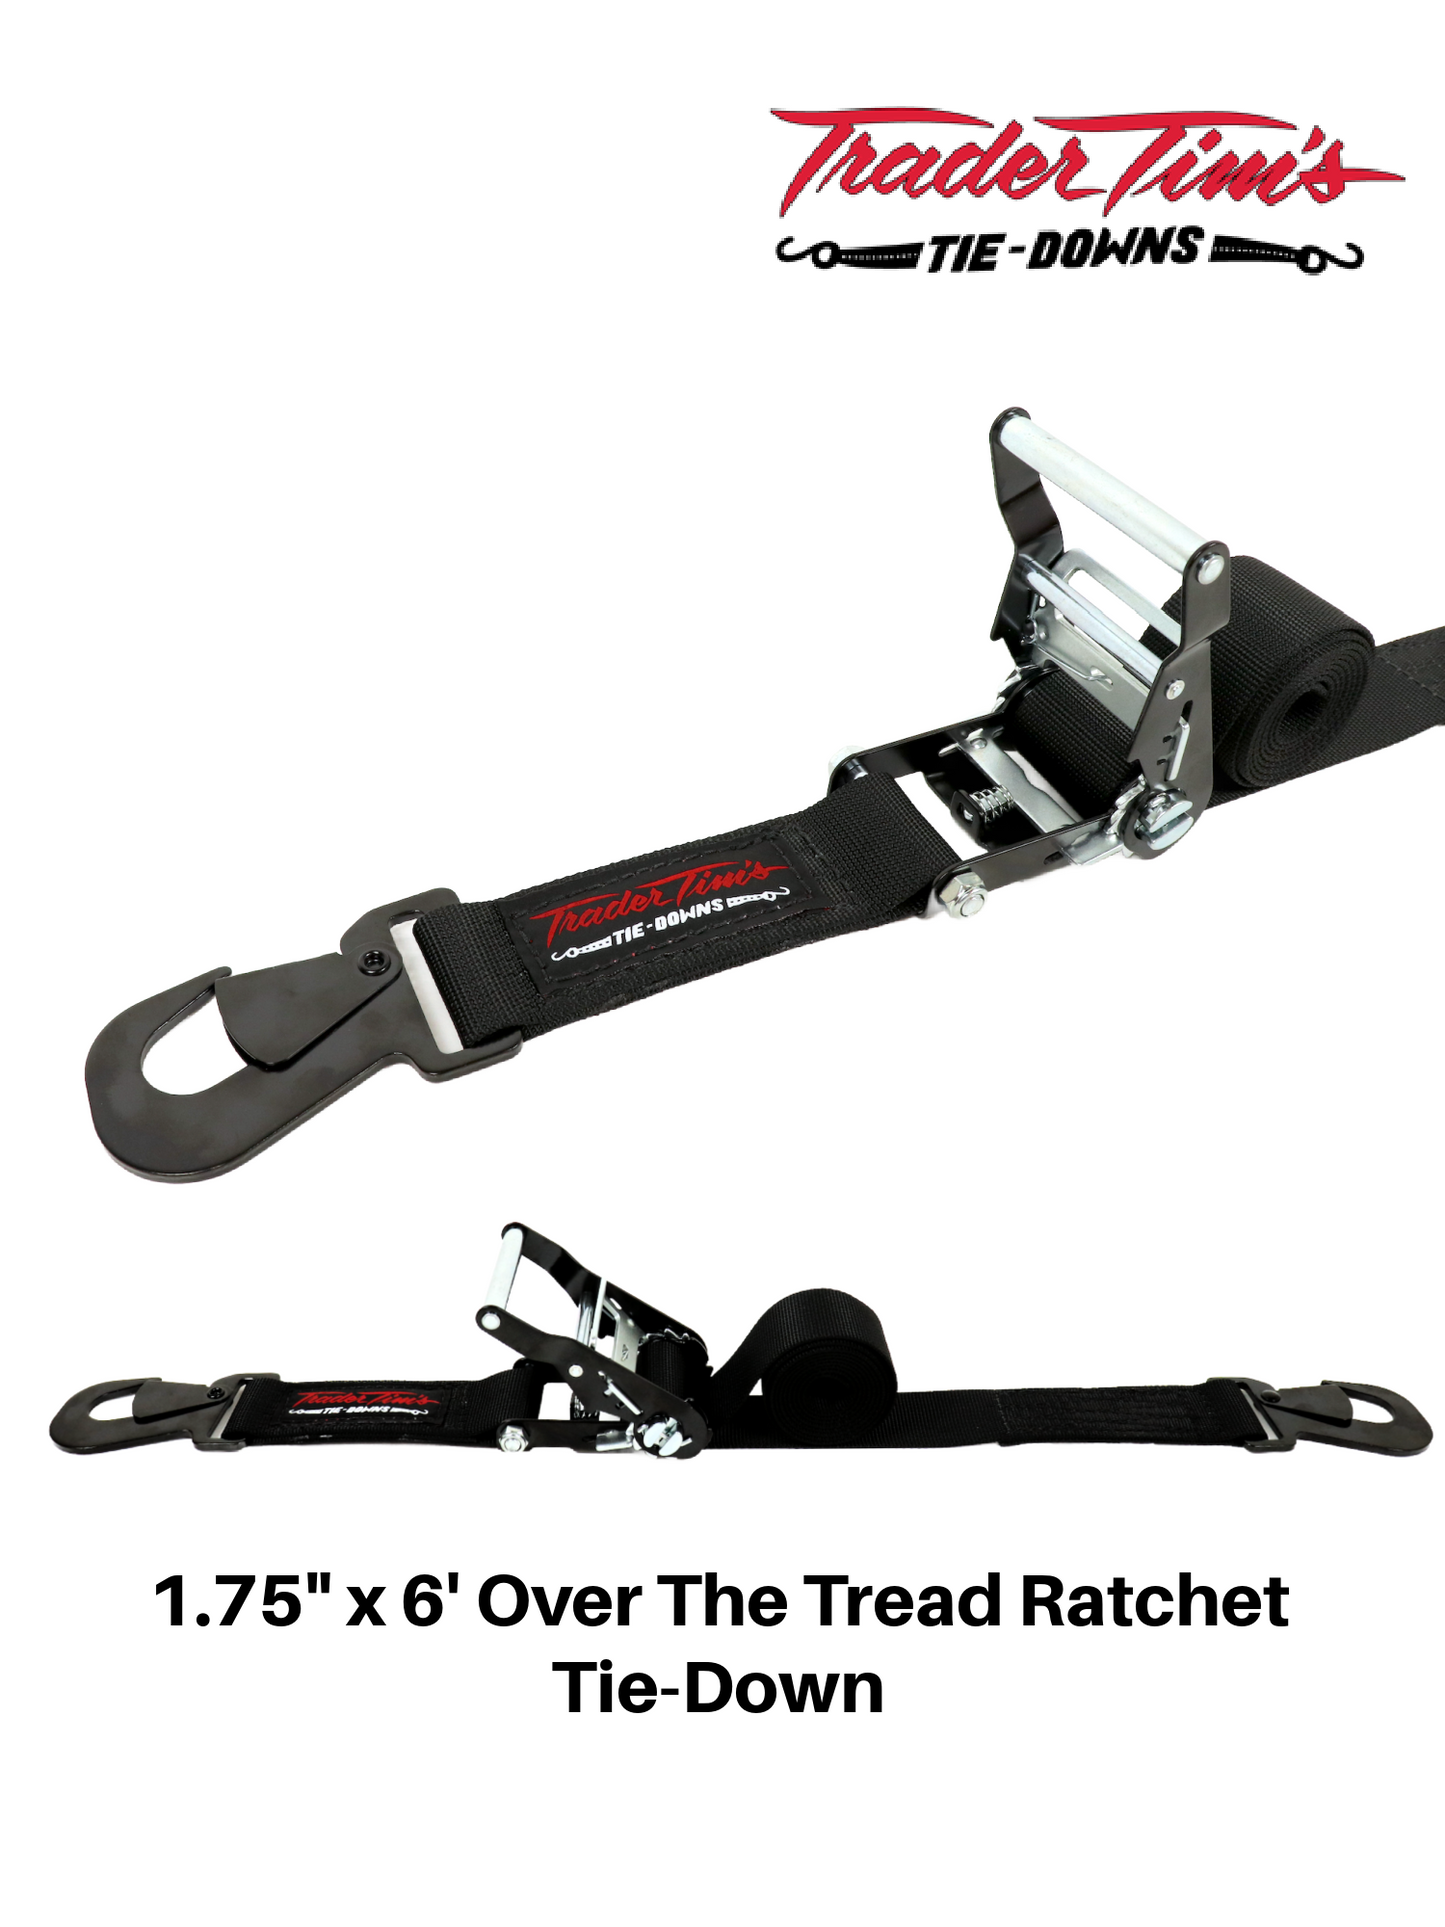 1.75" x 6' Over The Tread Ratchet Tie-Down - Black